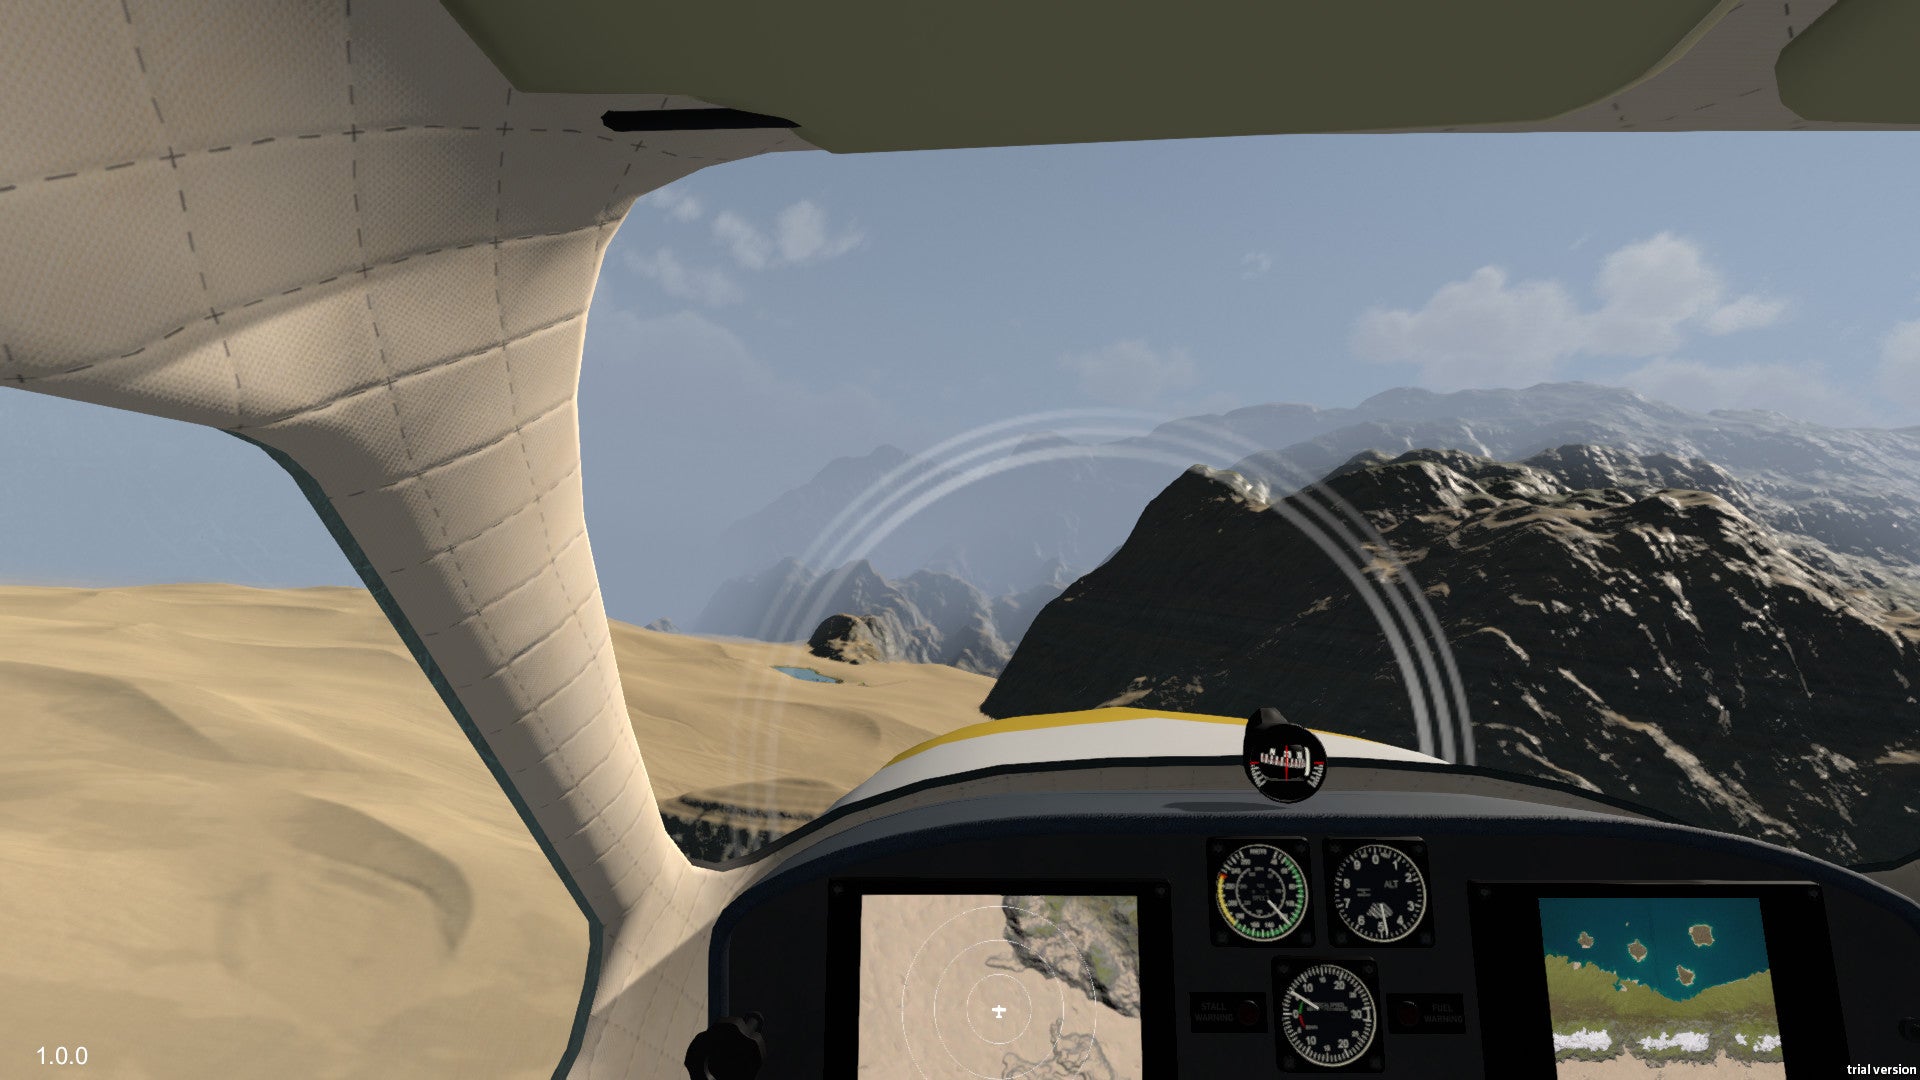 Coastline Flight Simulator (PS5) : Video Games 